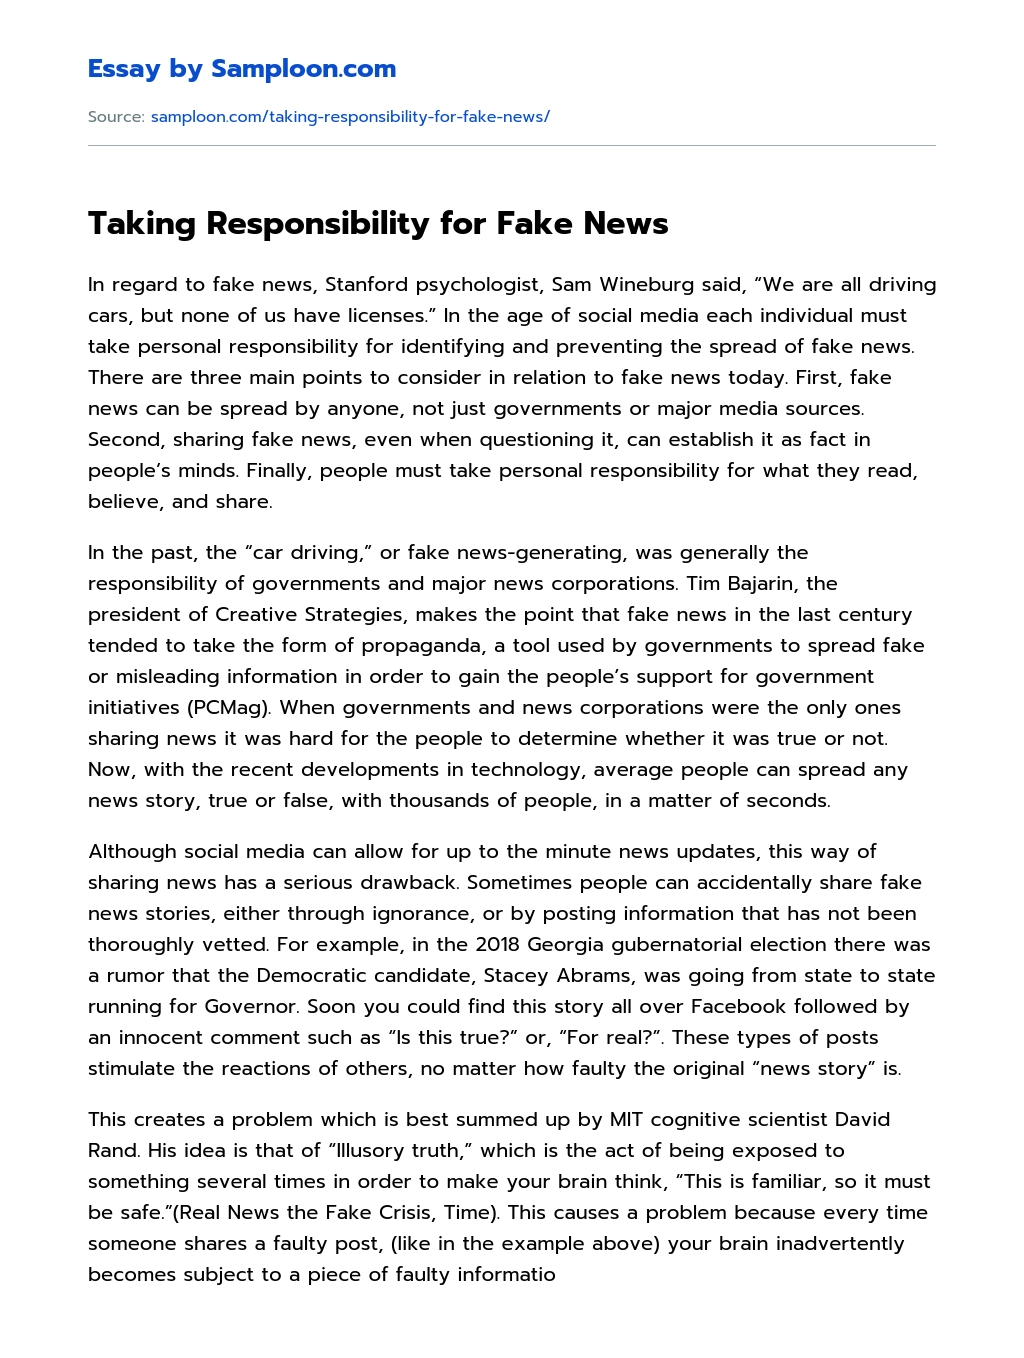 Taking Responsibility for Fake News essay